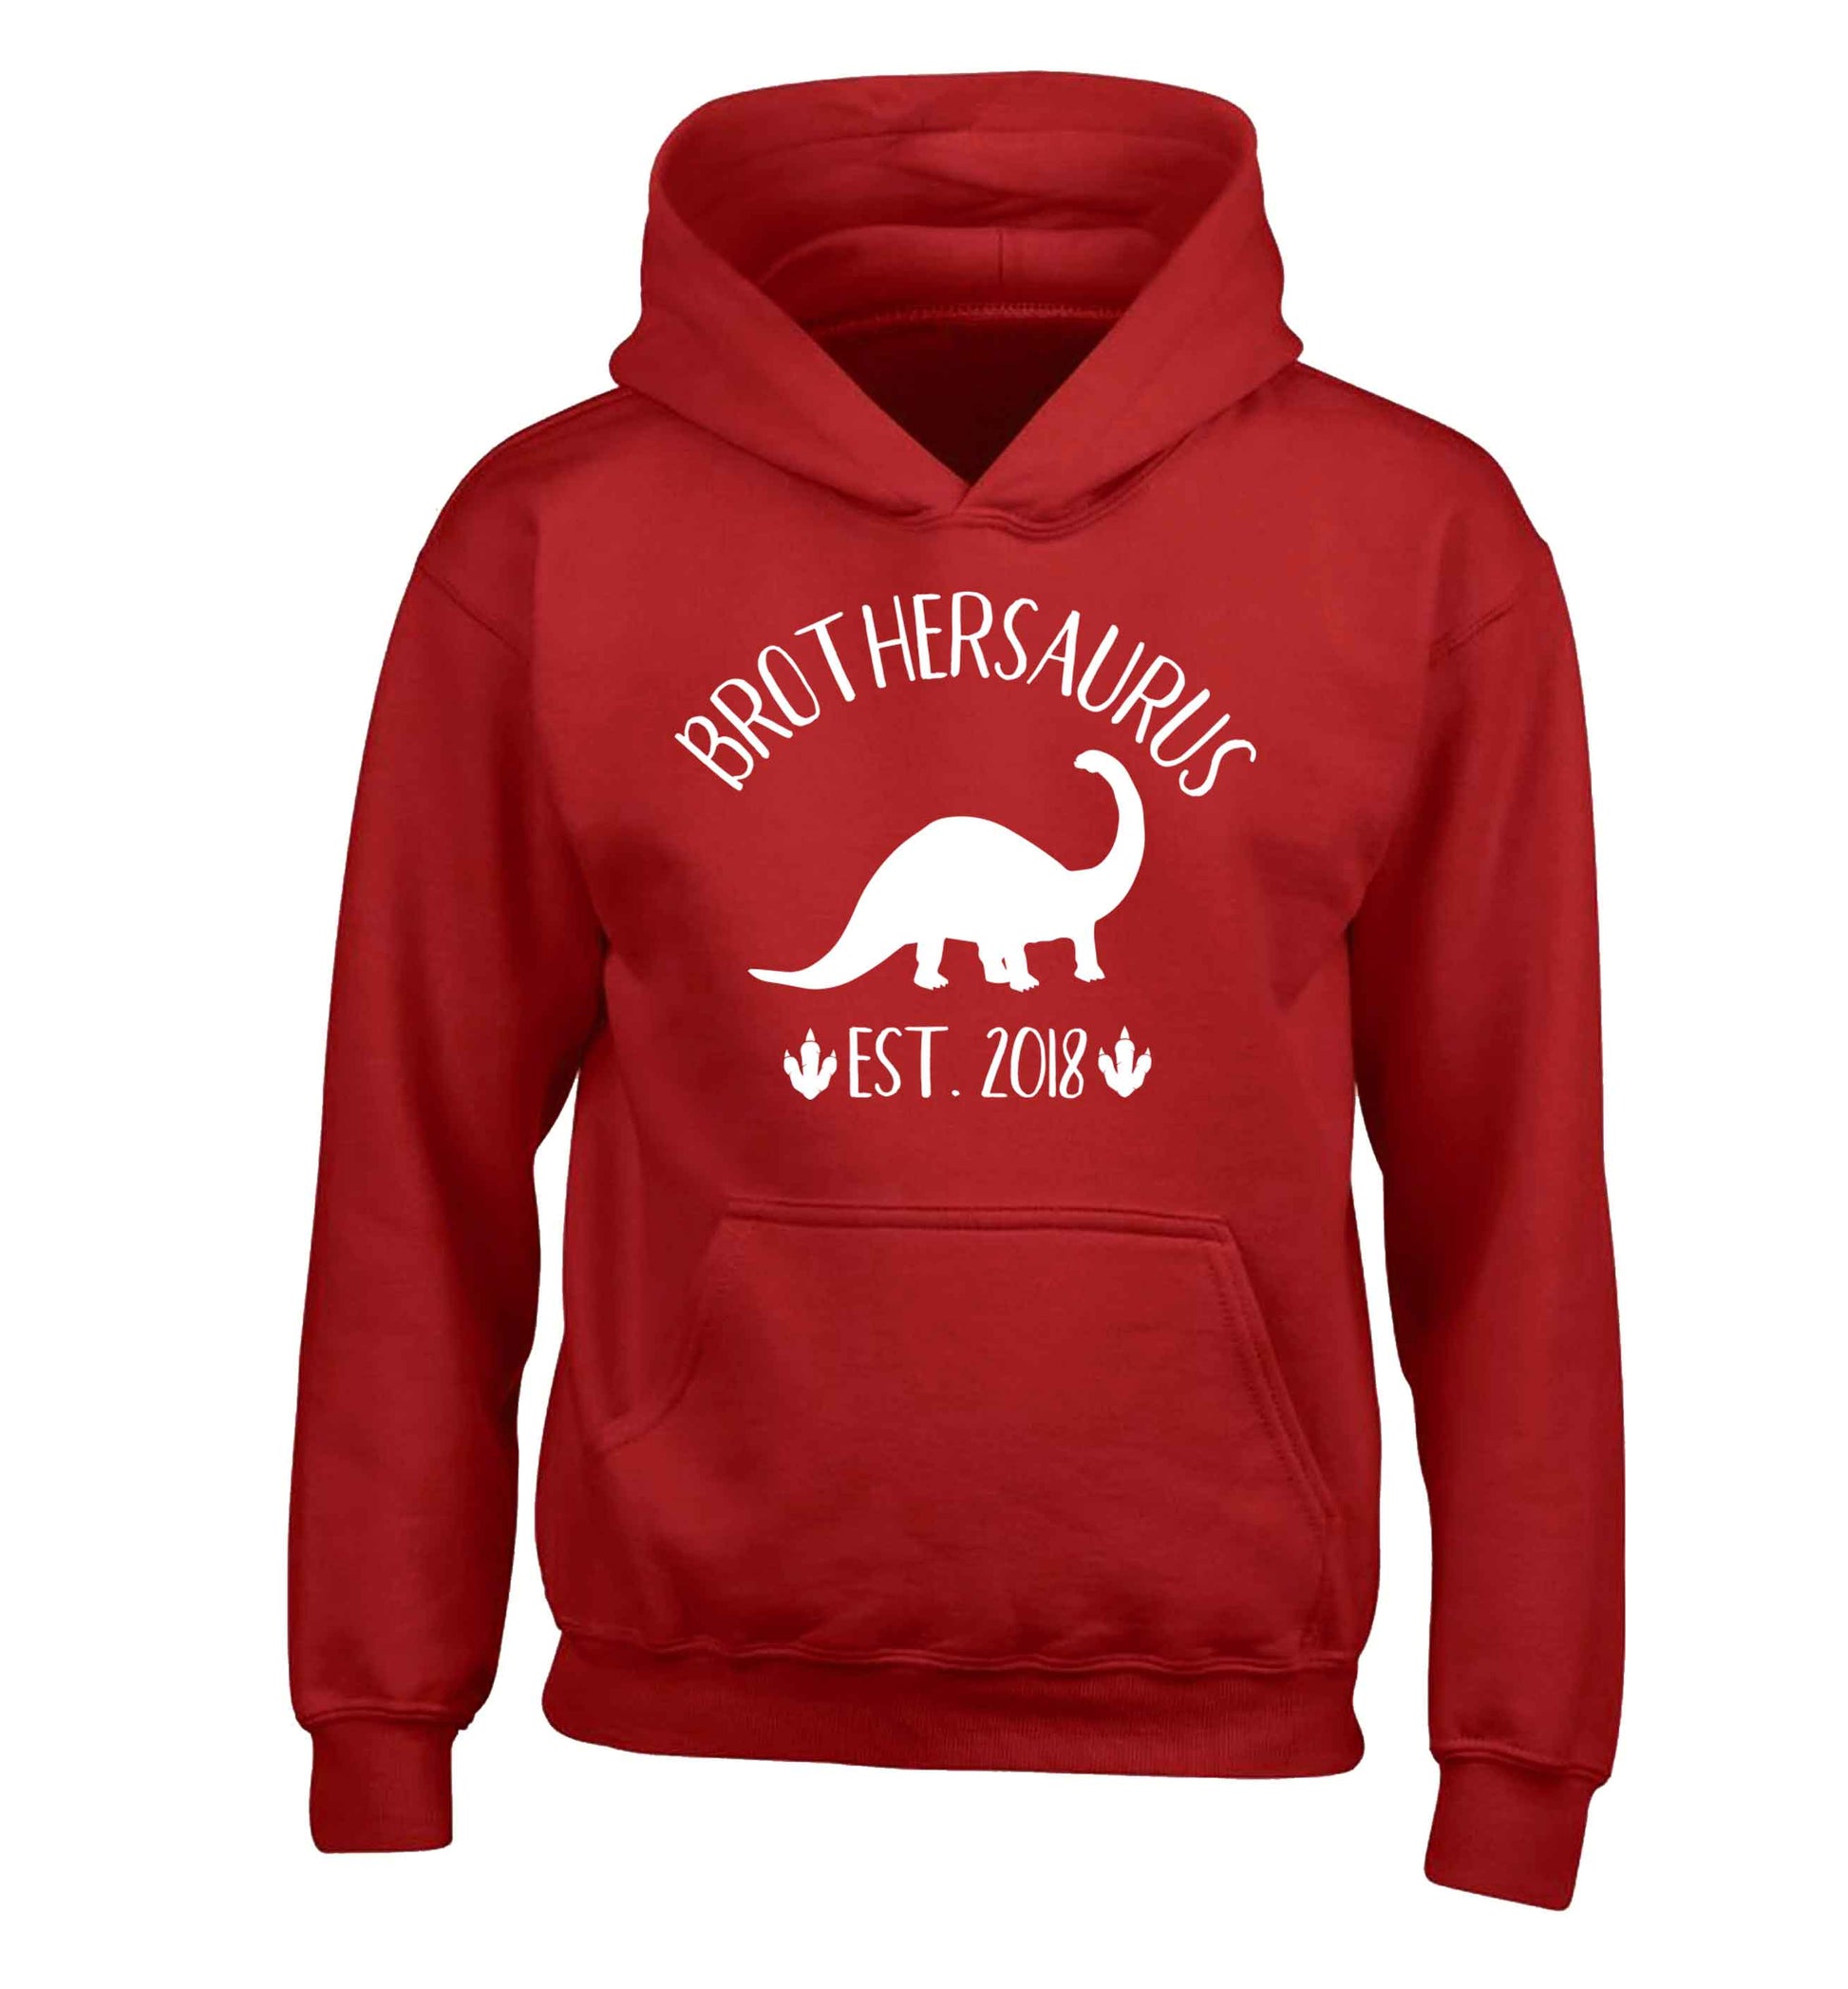 Personalised brothersaurus since (custom date) children's red hoodie 12-13 Years